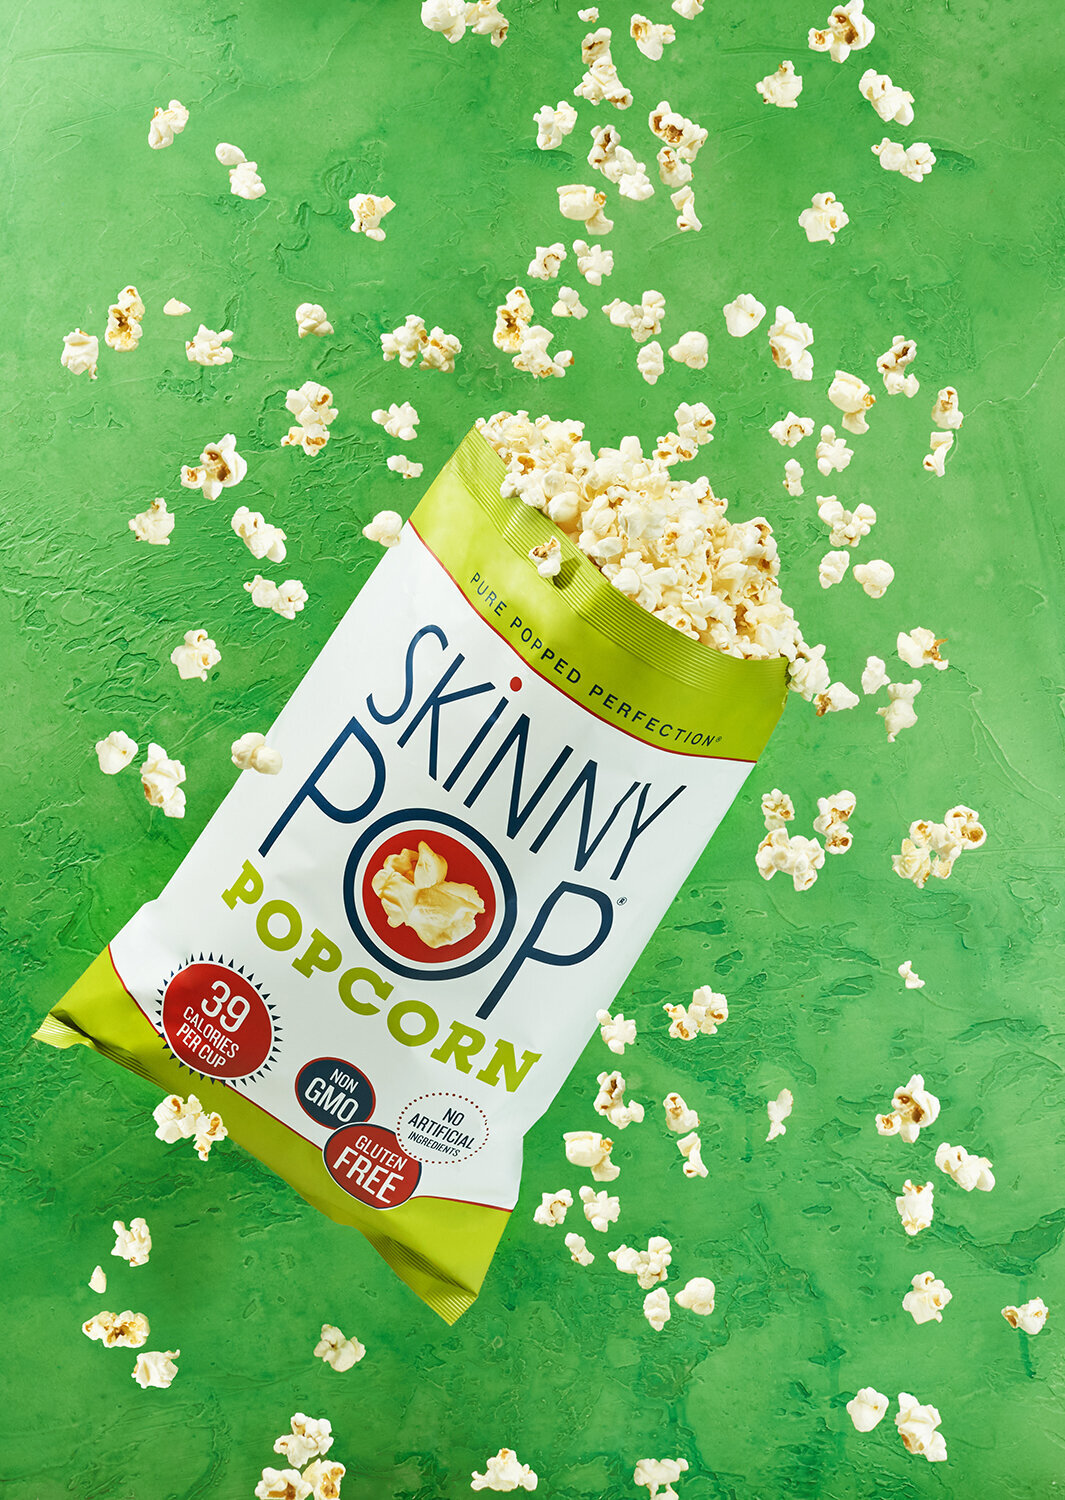 skinnypop popcorn bag popcorn explosion on green